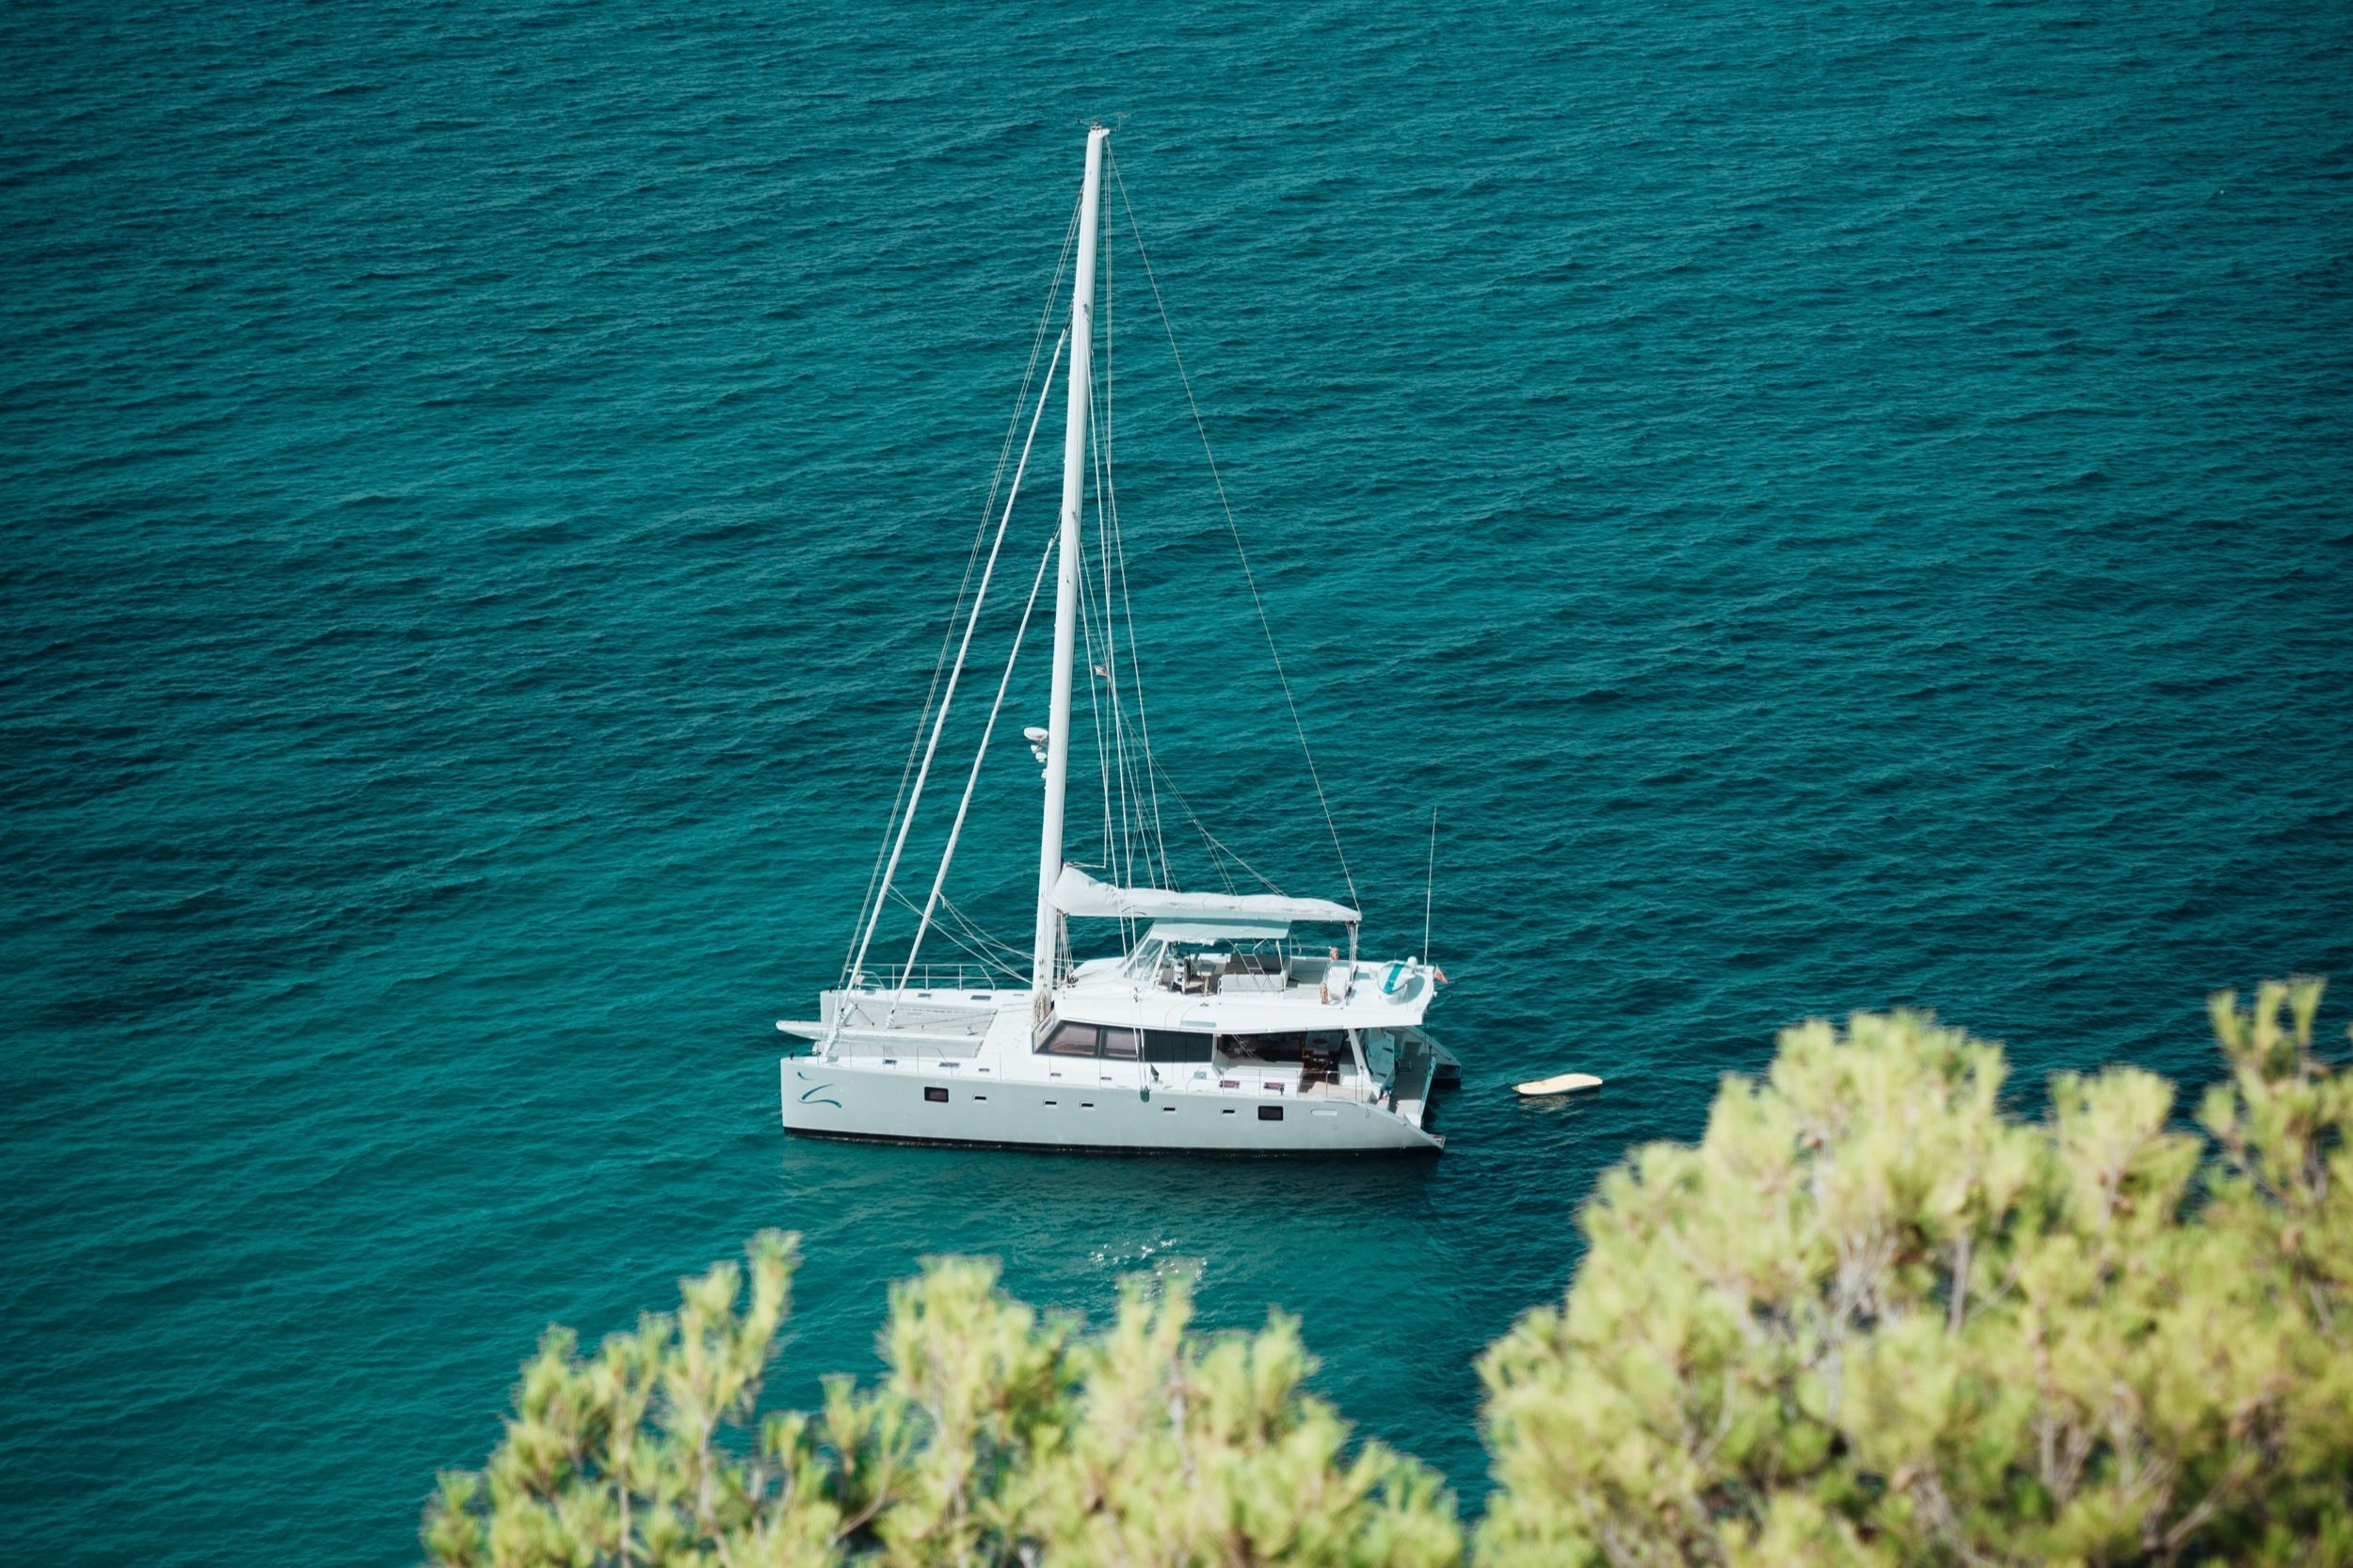 Sailing the Greek isles